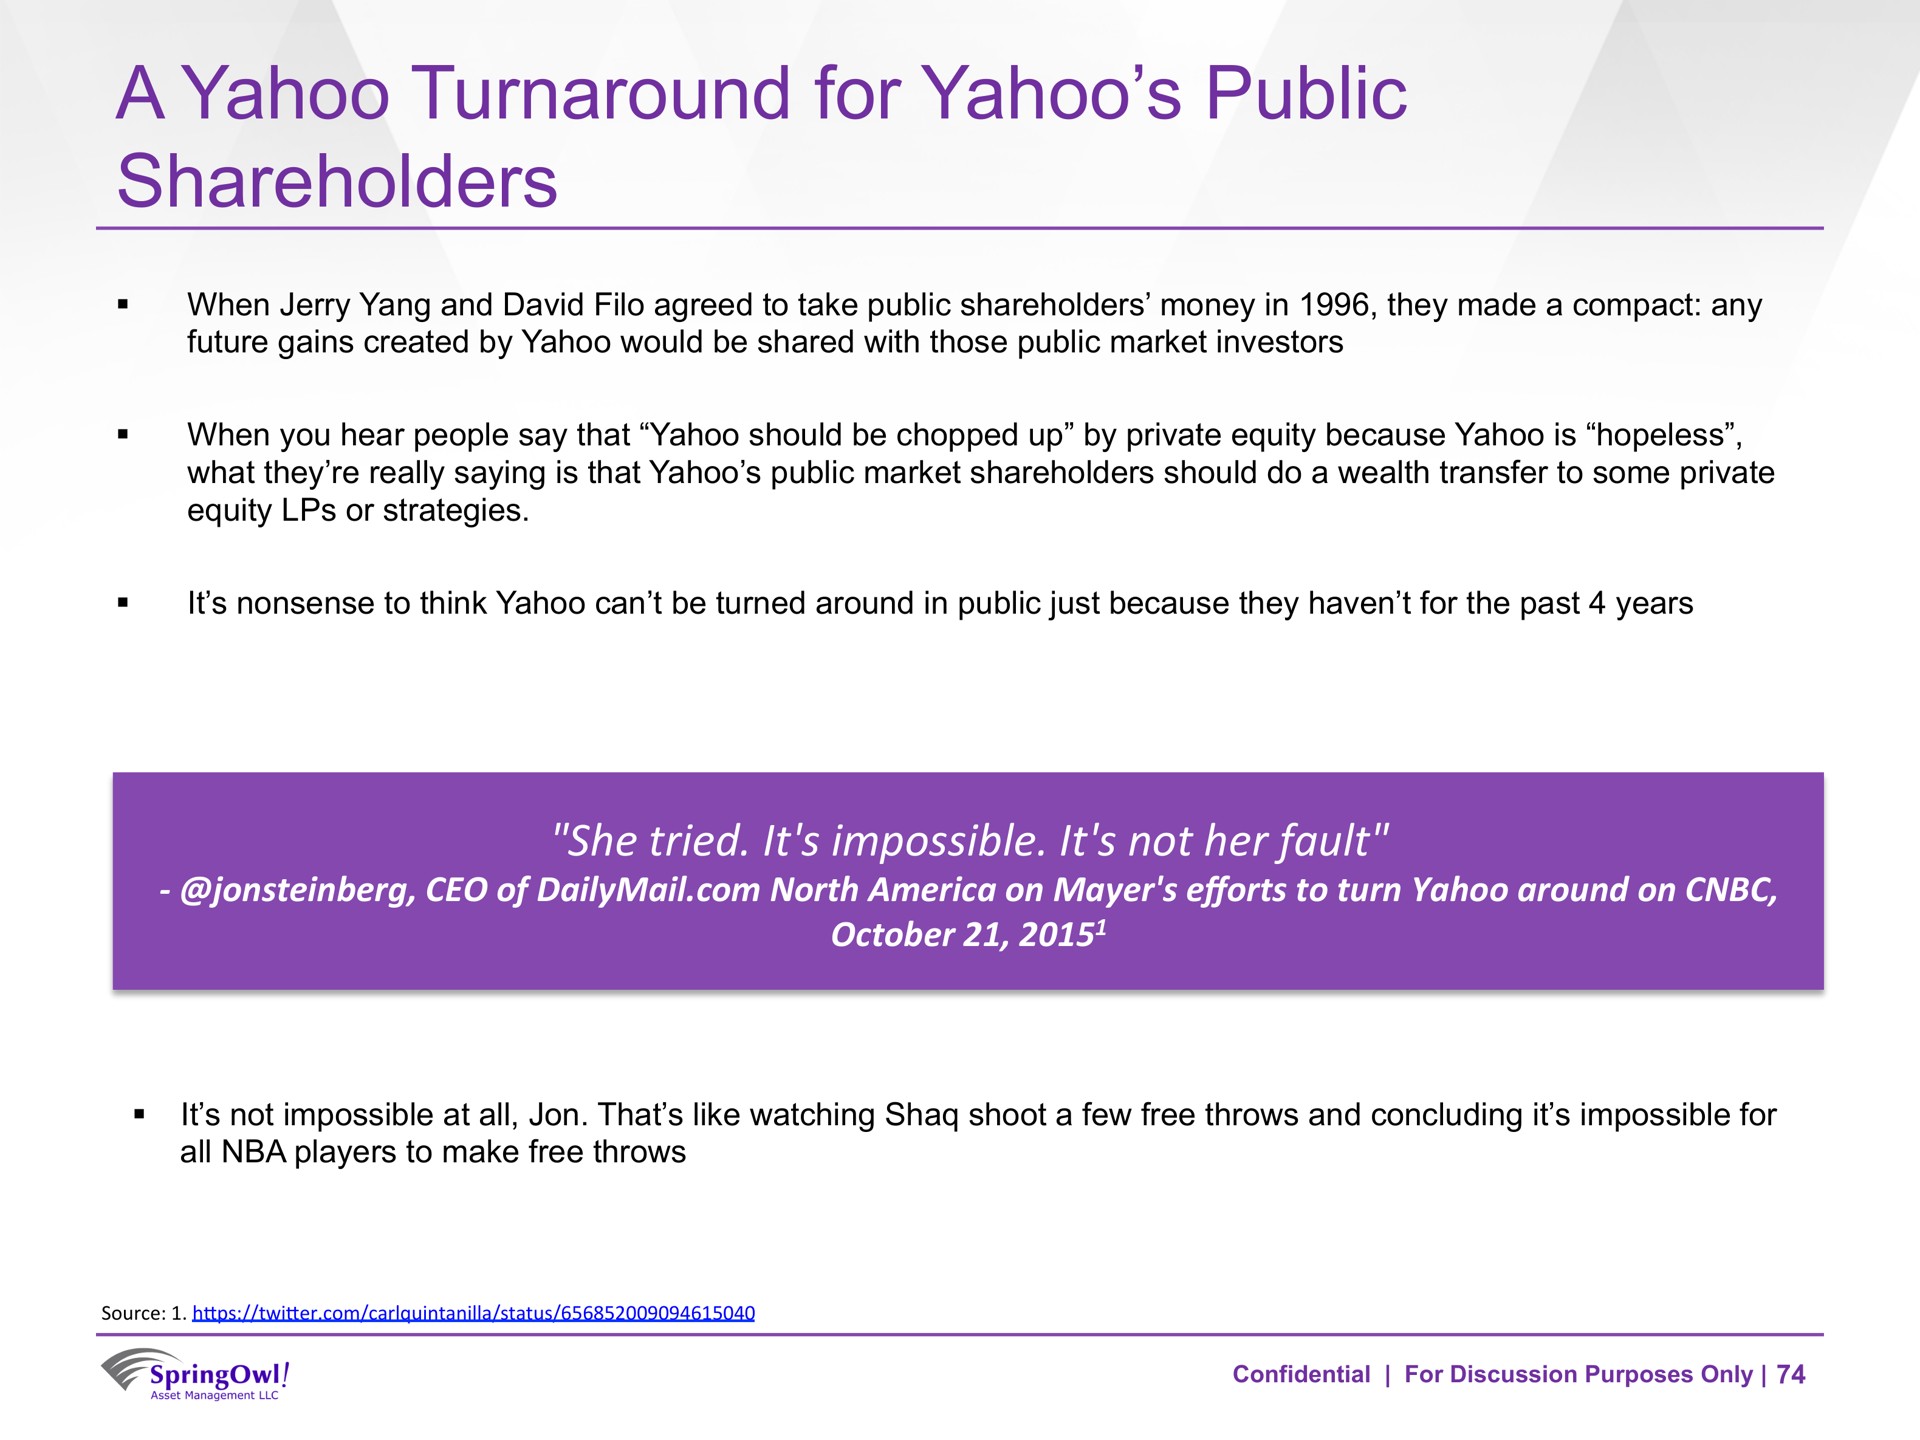 a yahoo turnaround for yahoo public shareholders | SpringOwl